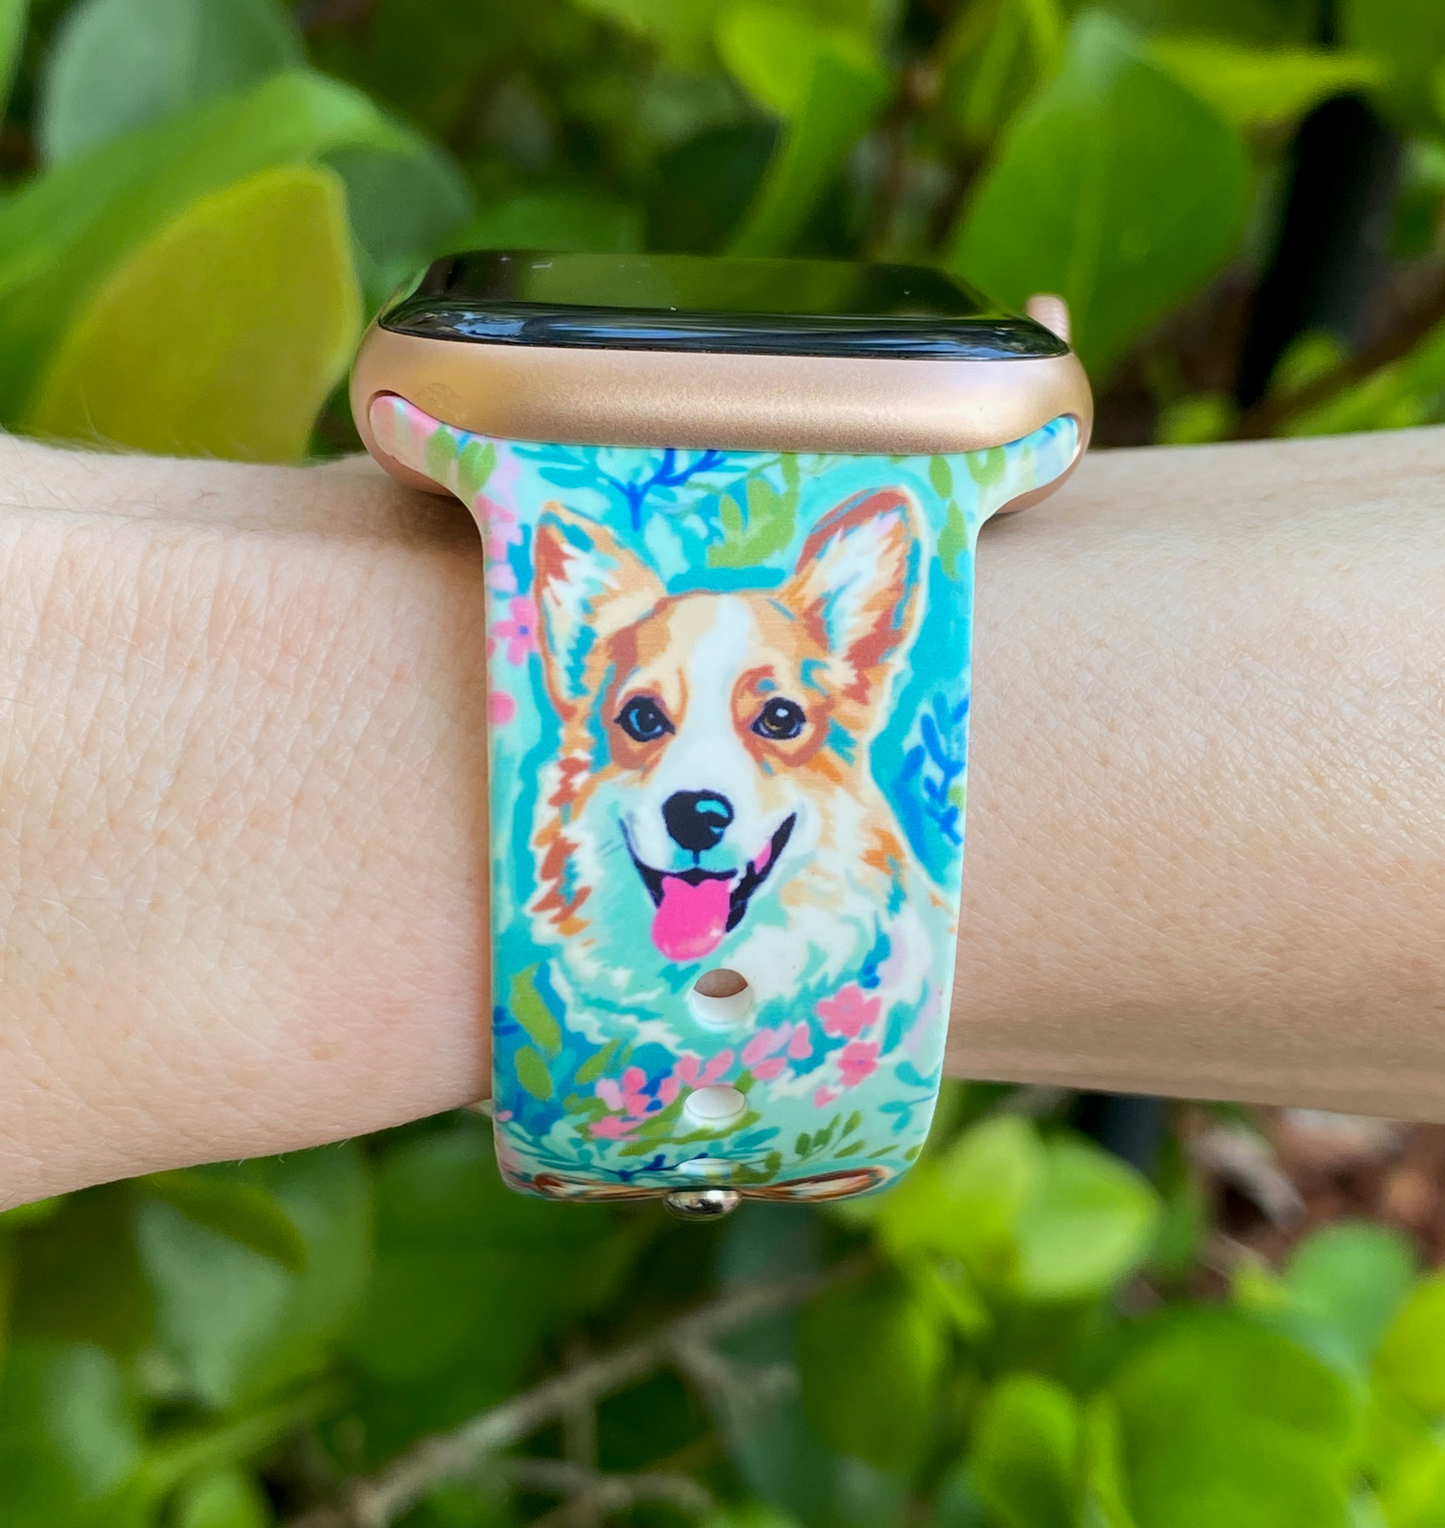 Corgi Dog Apple Watch Band